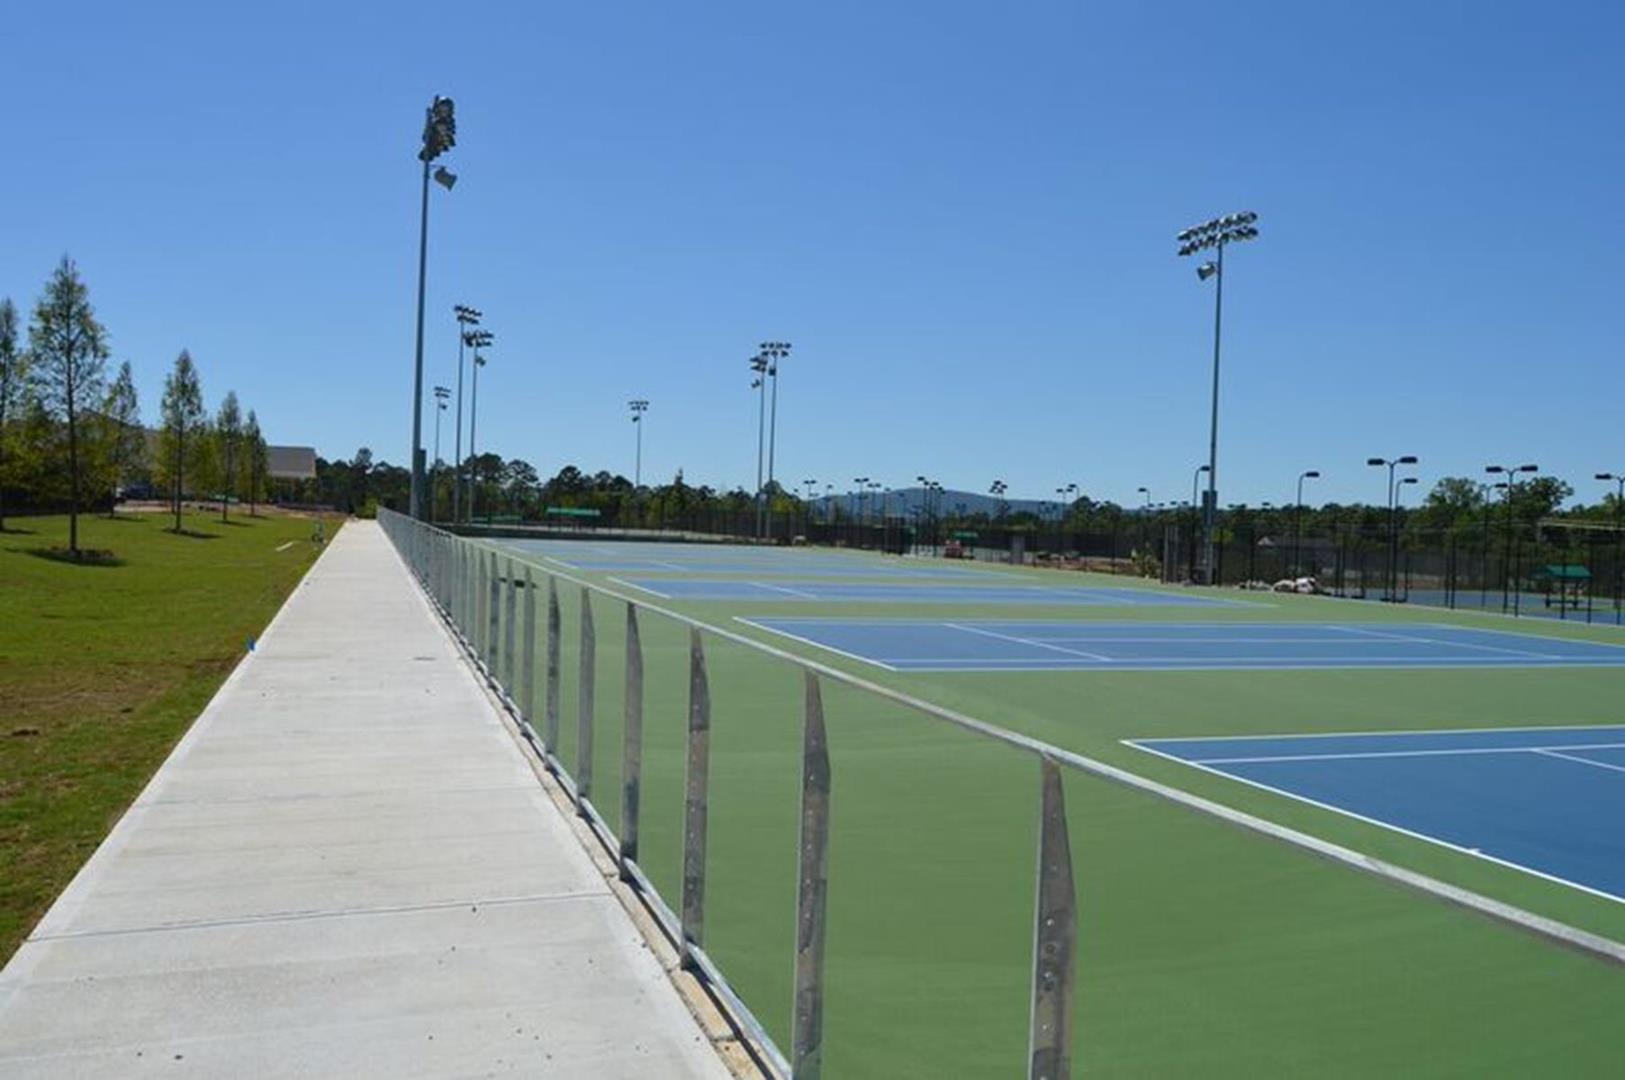 Rome Tennis Center - Tennis Courts